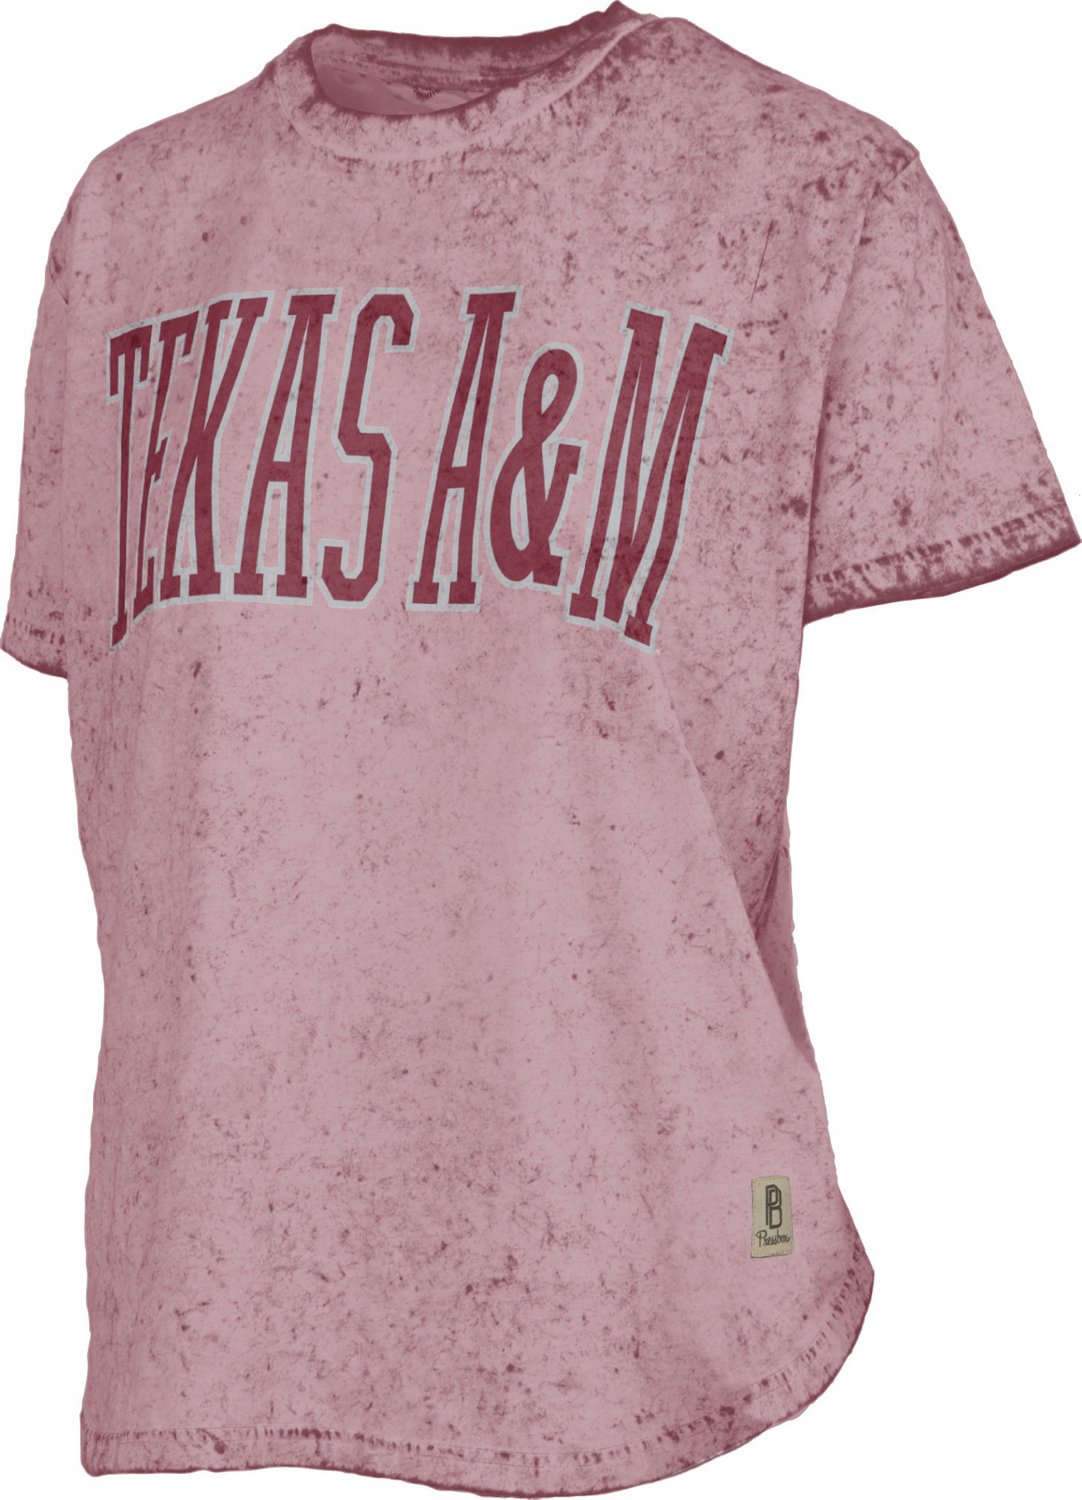 Campus Women's Shirt - Pink - M